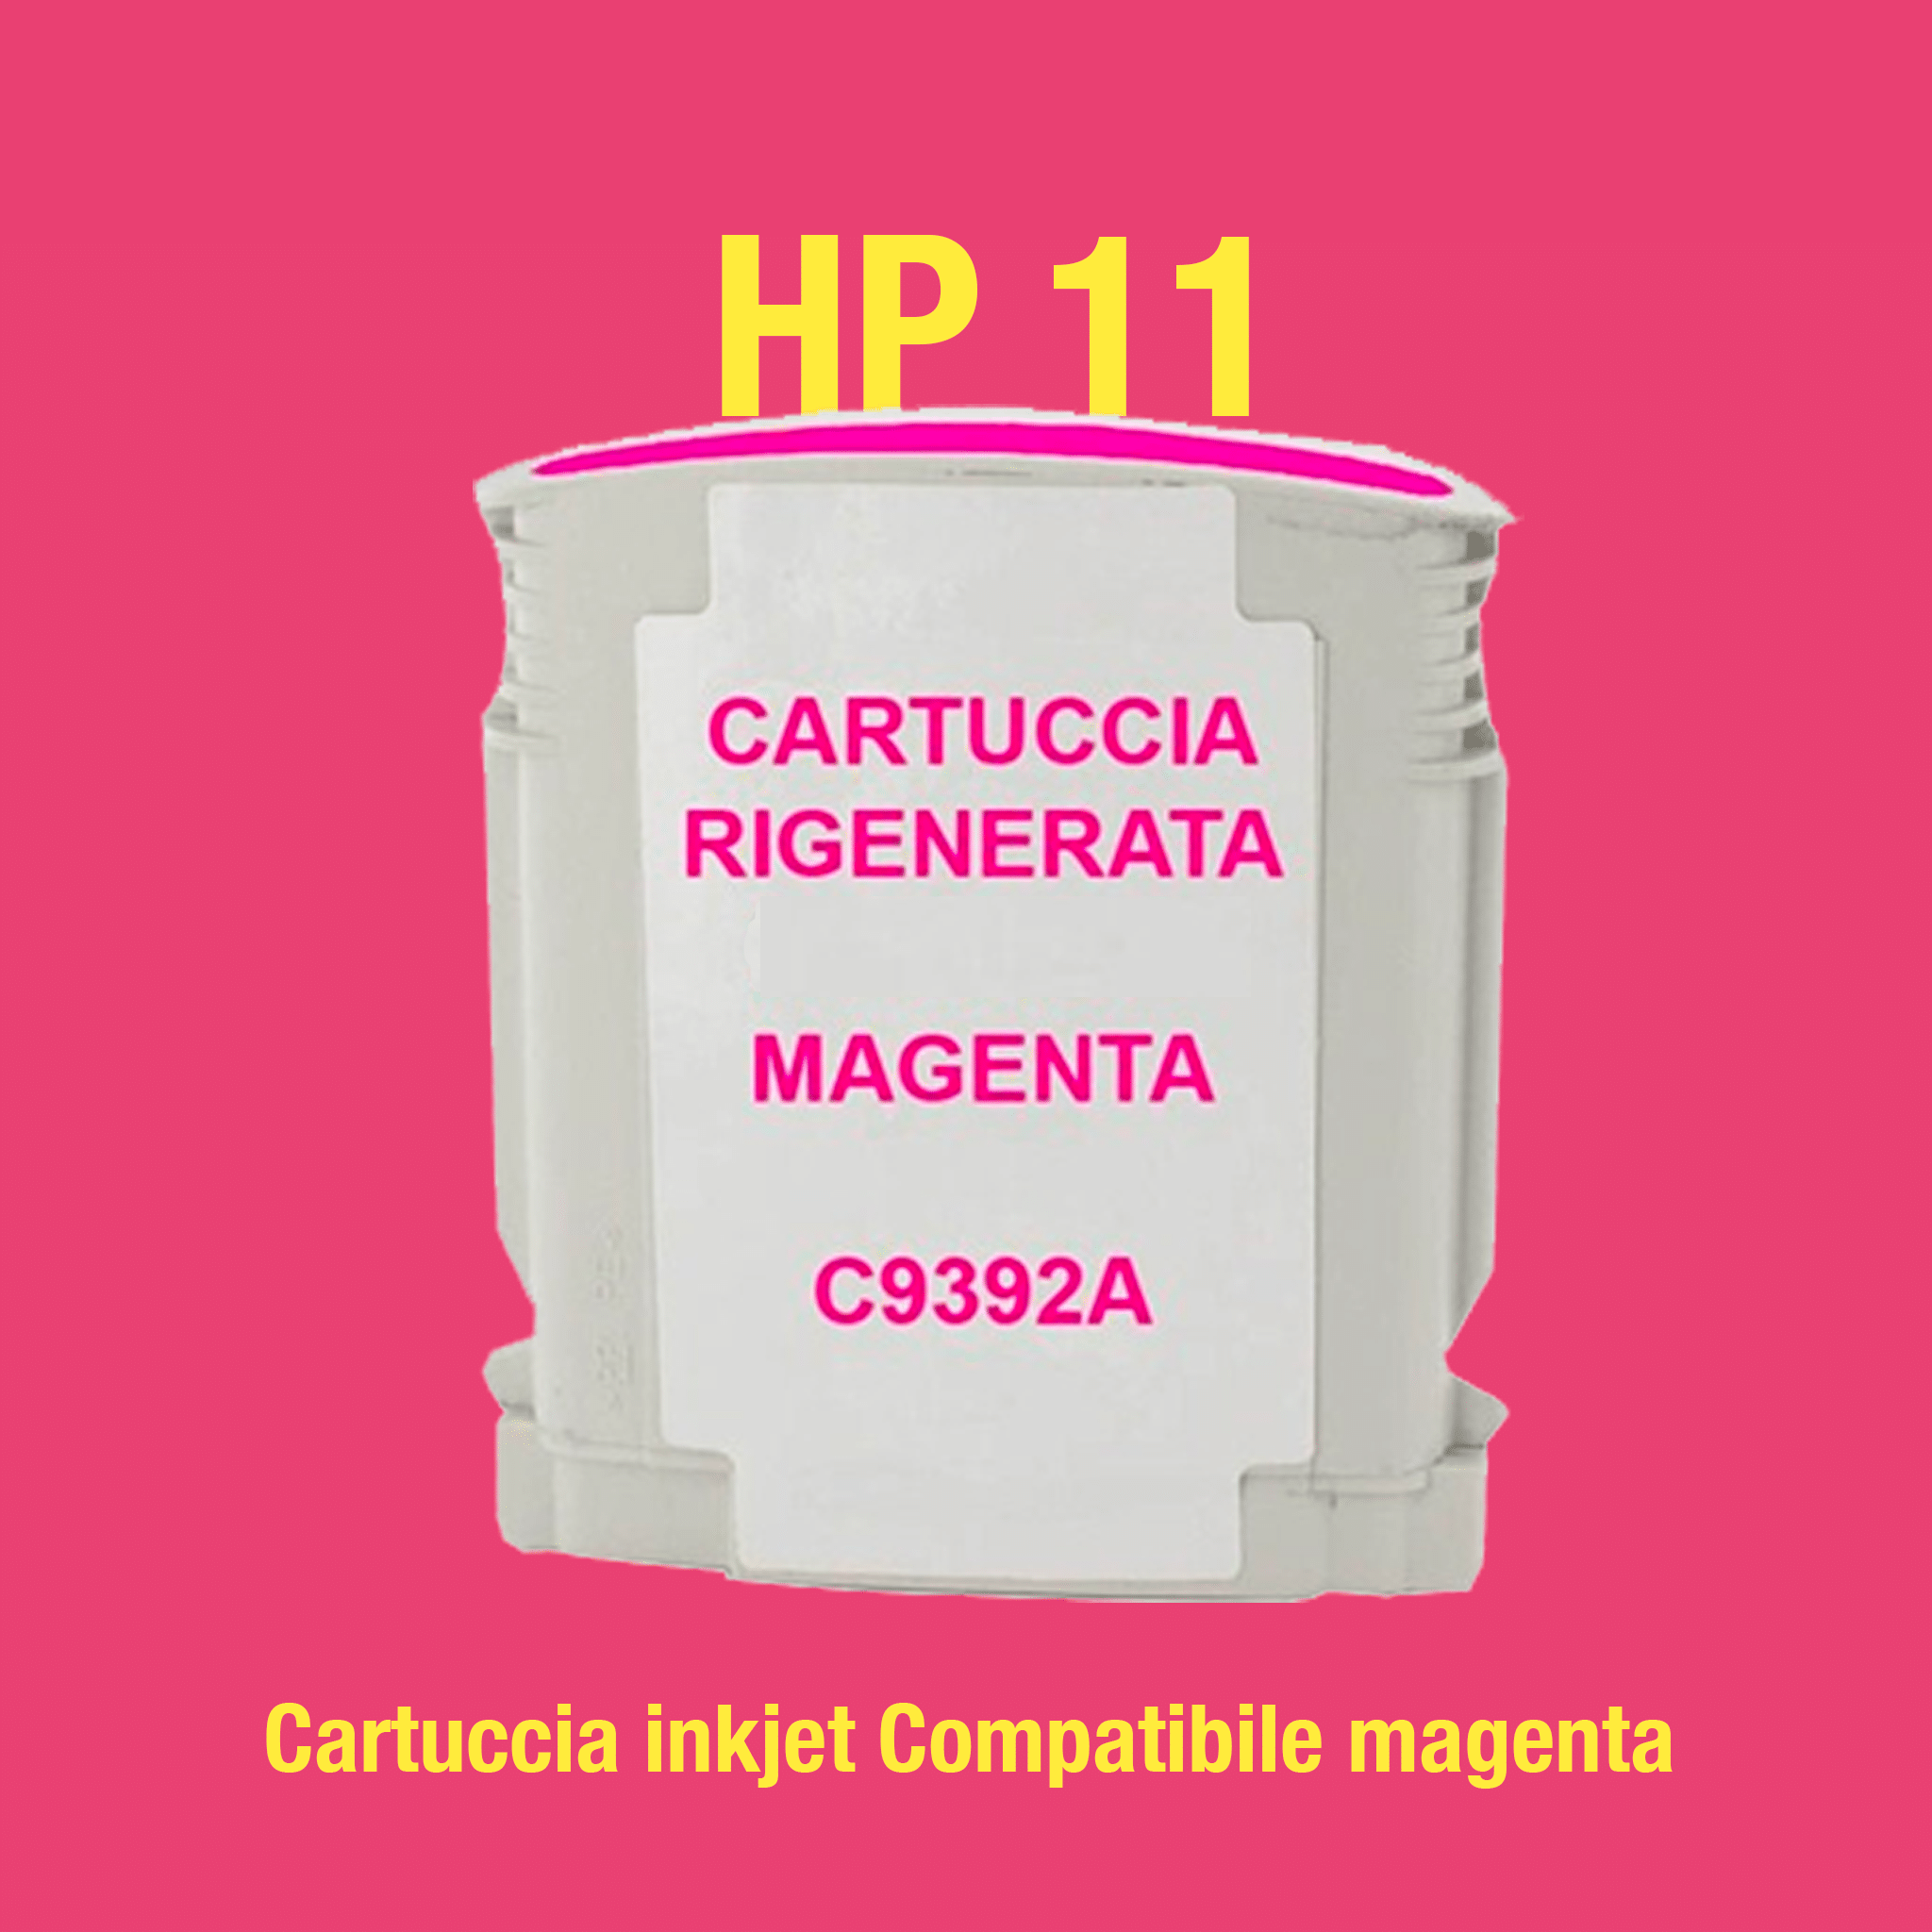 HP11_Magenta